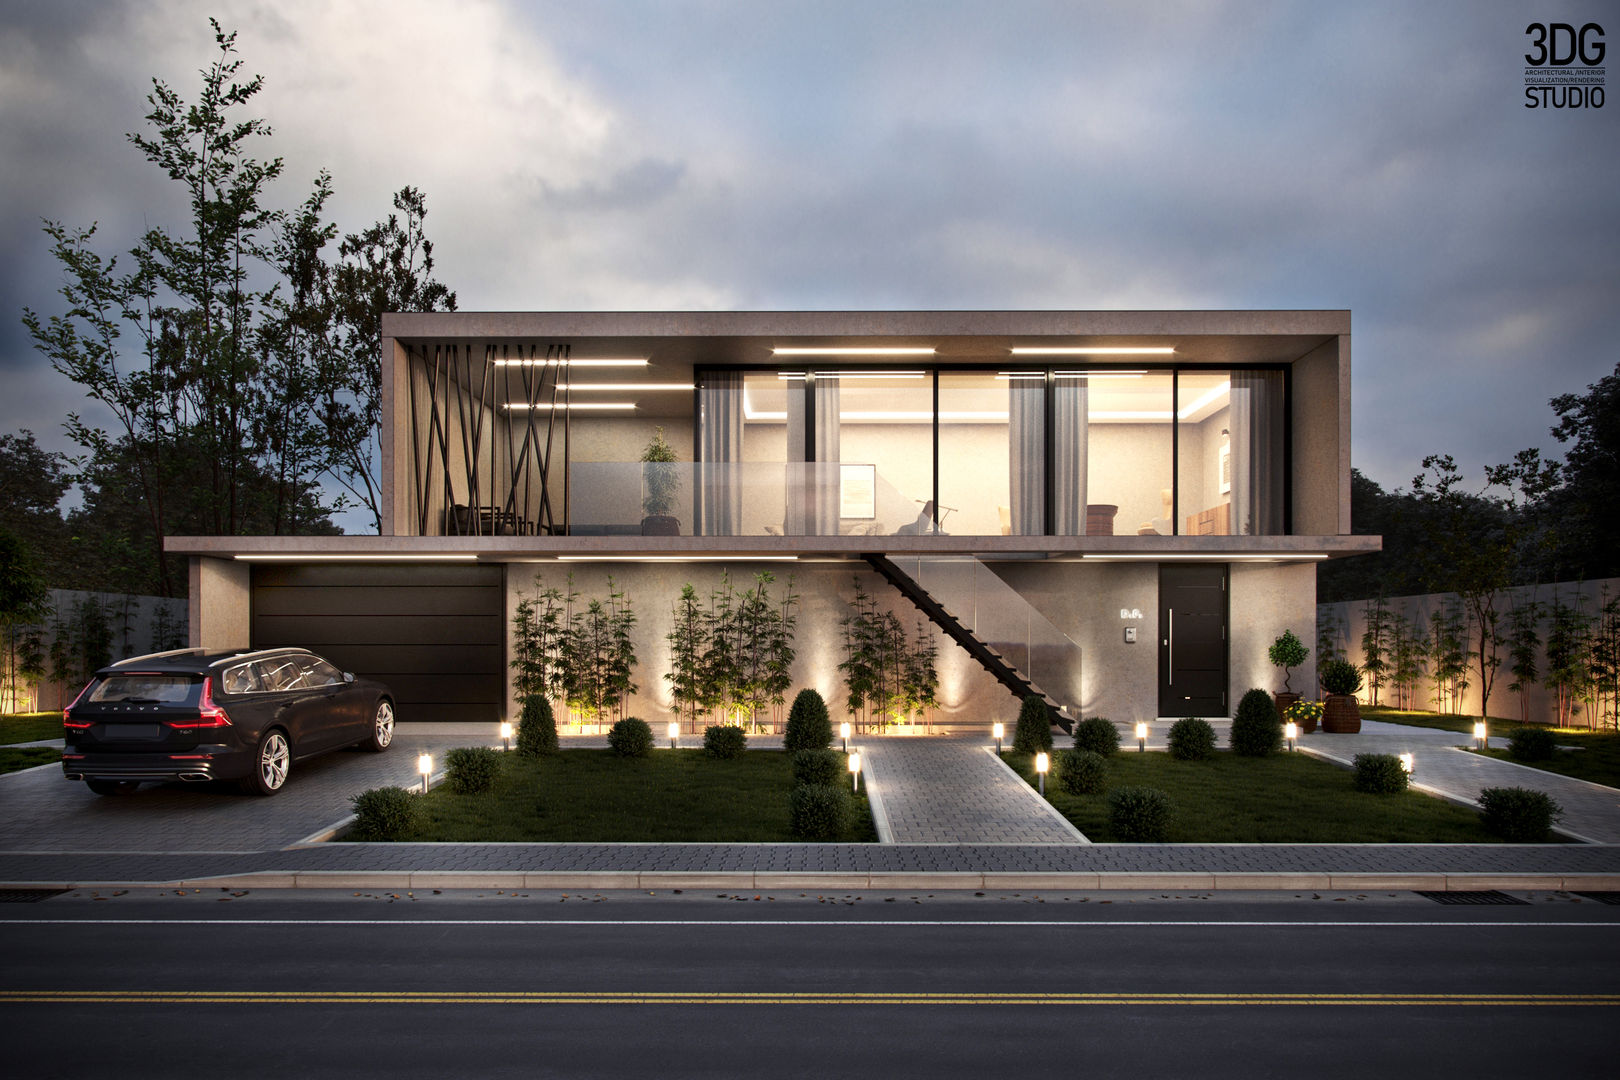 3D Rendering modern house for catalogue. 3DG STUDIO - Render fotorealistico Modern houses